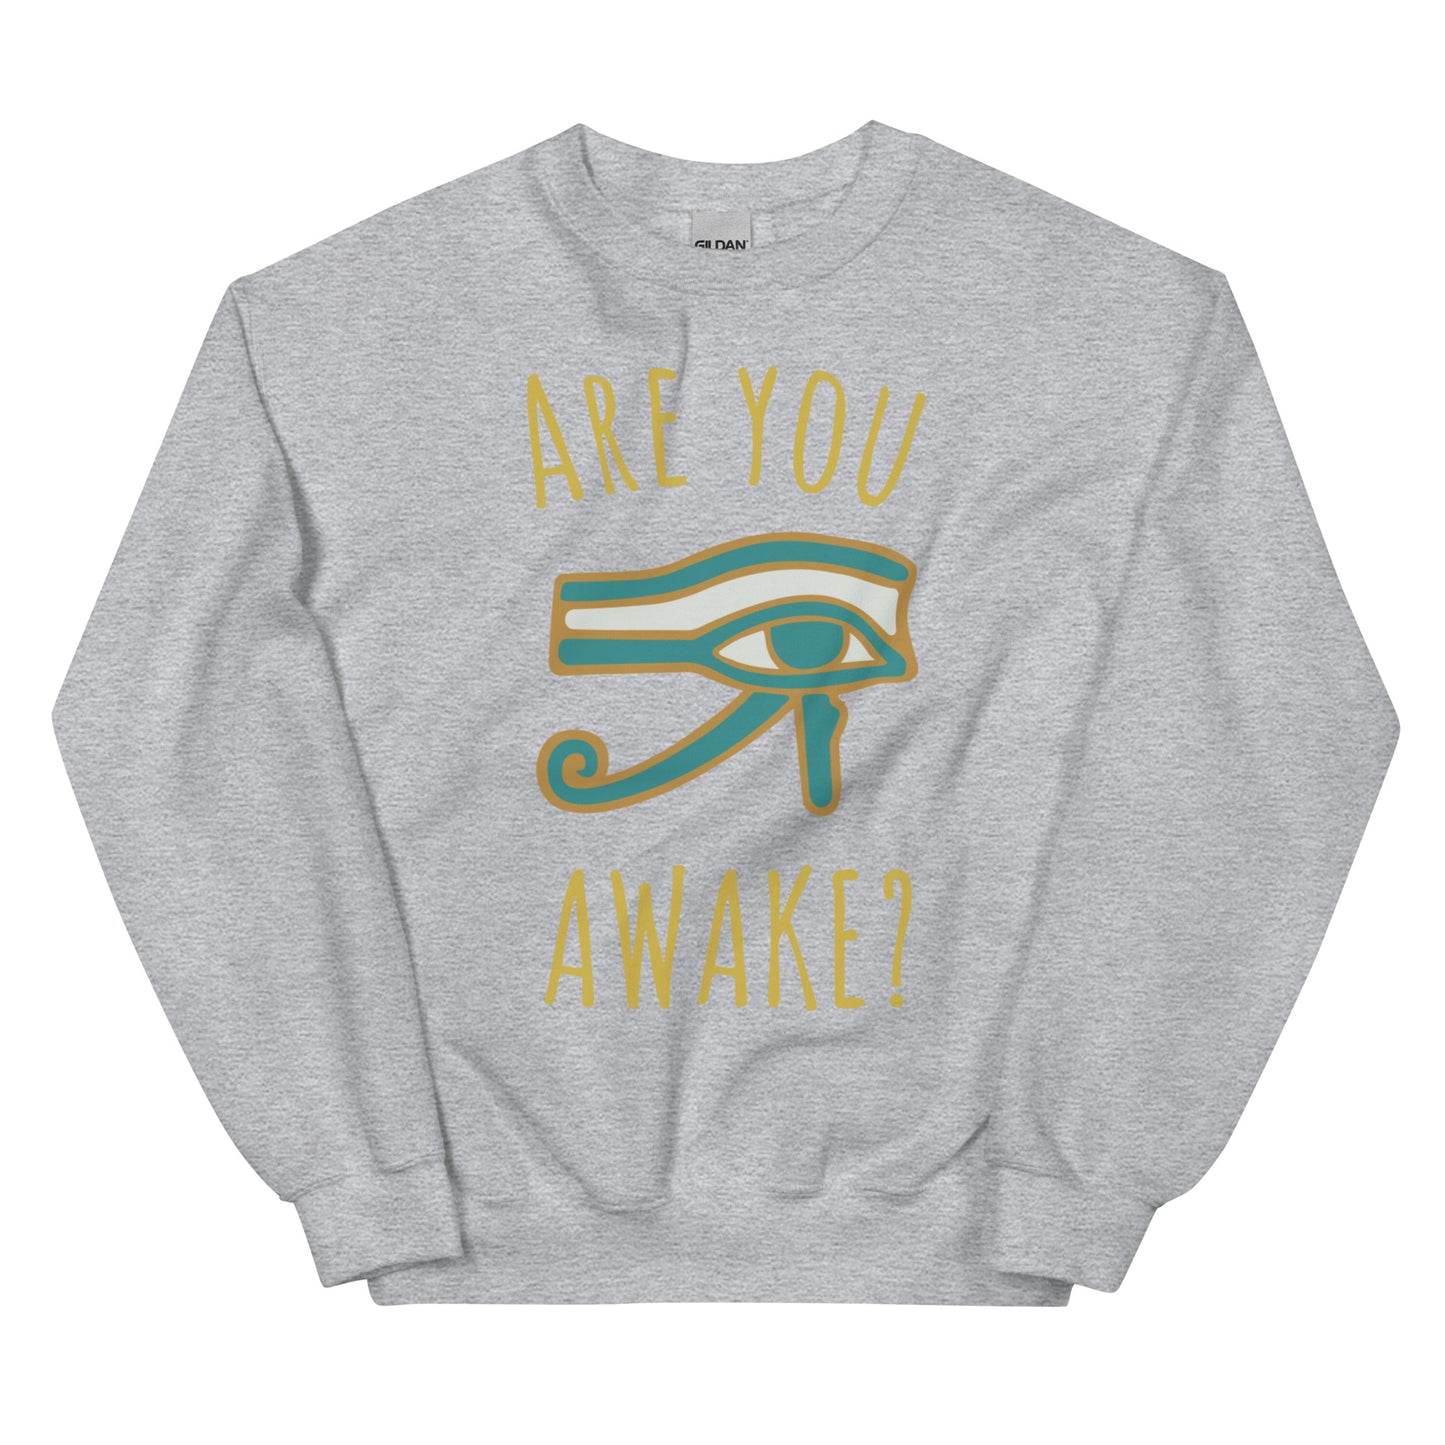 Are you Awake? Unisex crew neck Sweatshirt